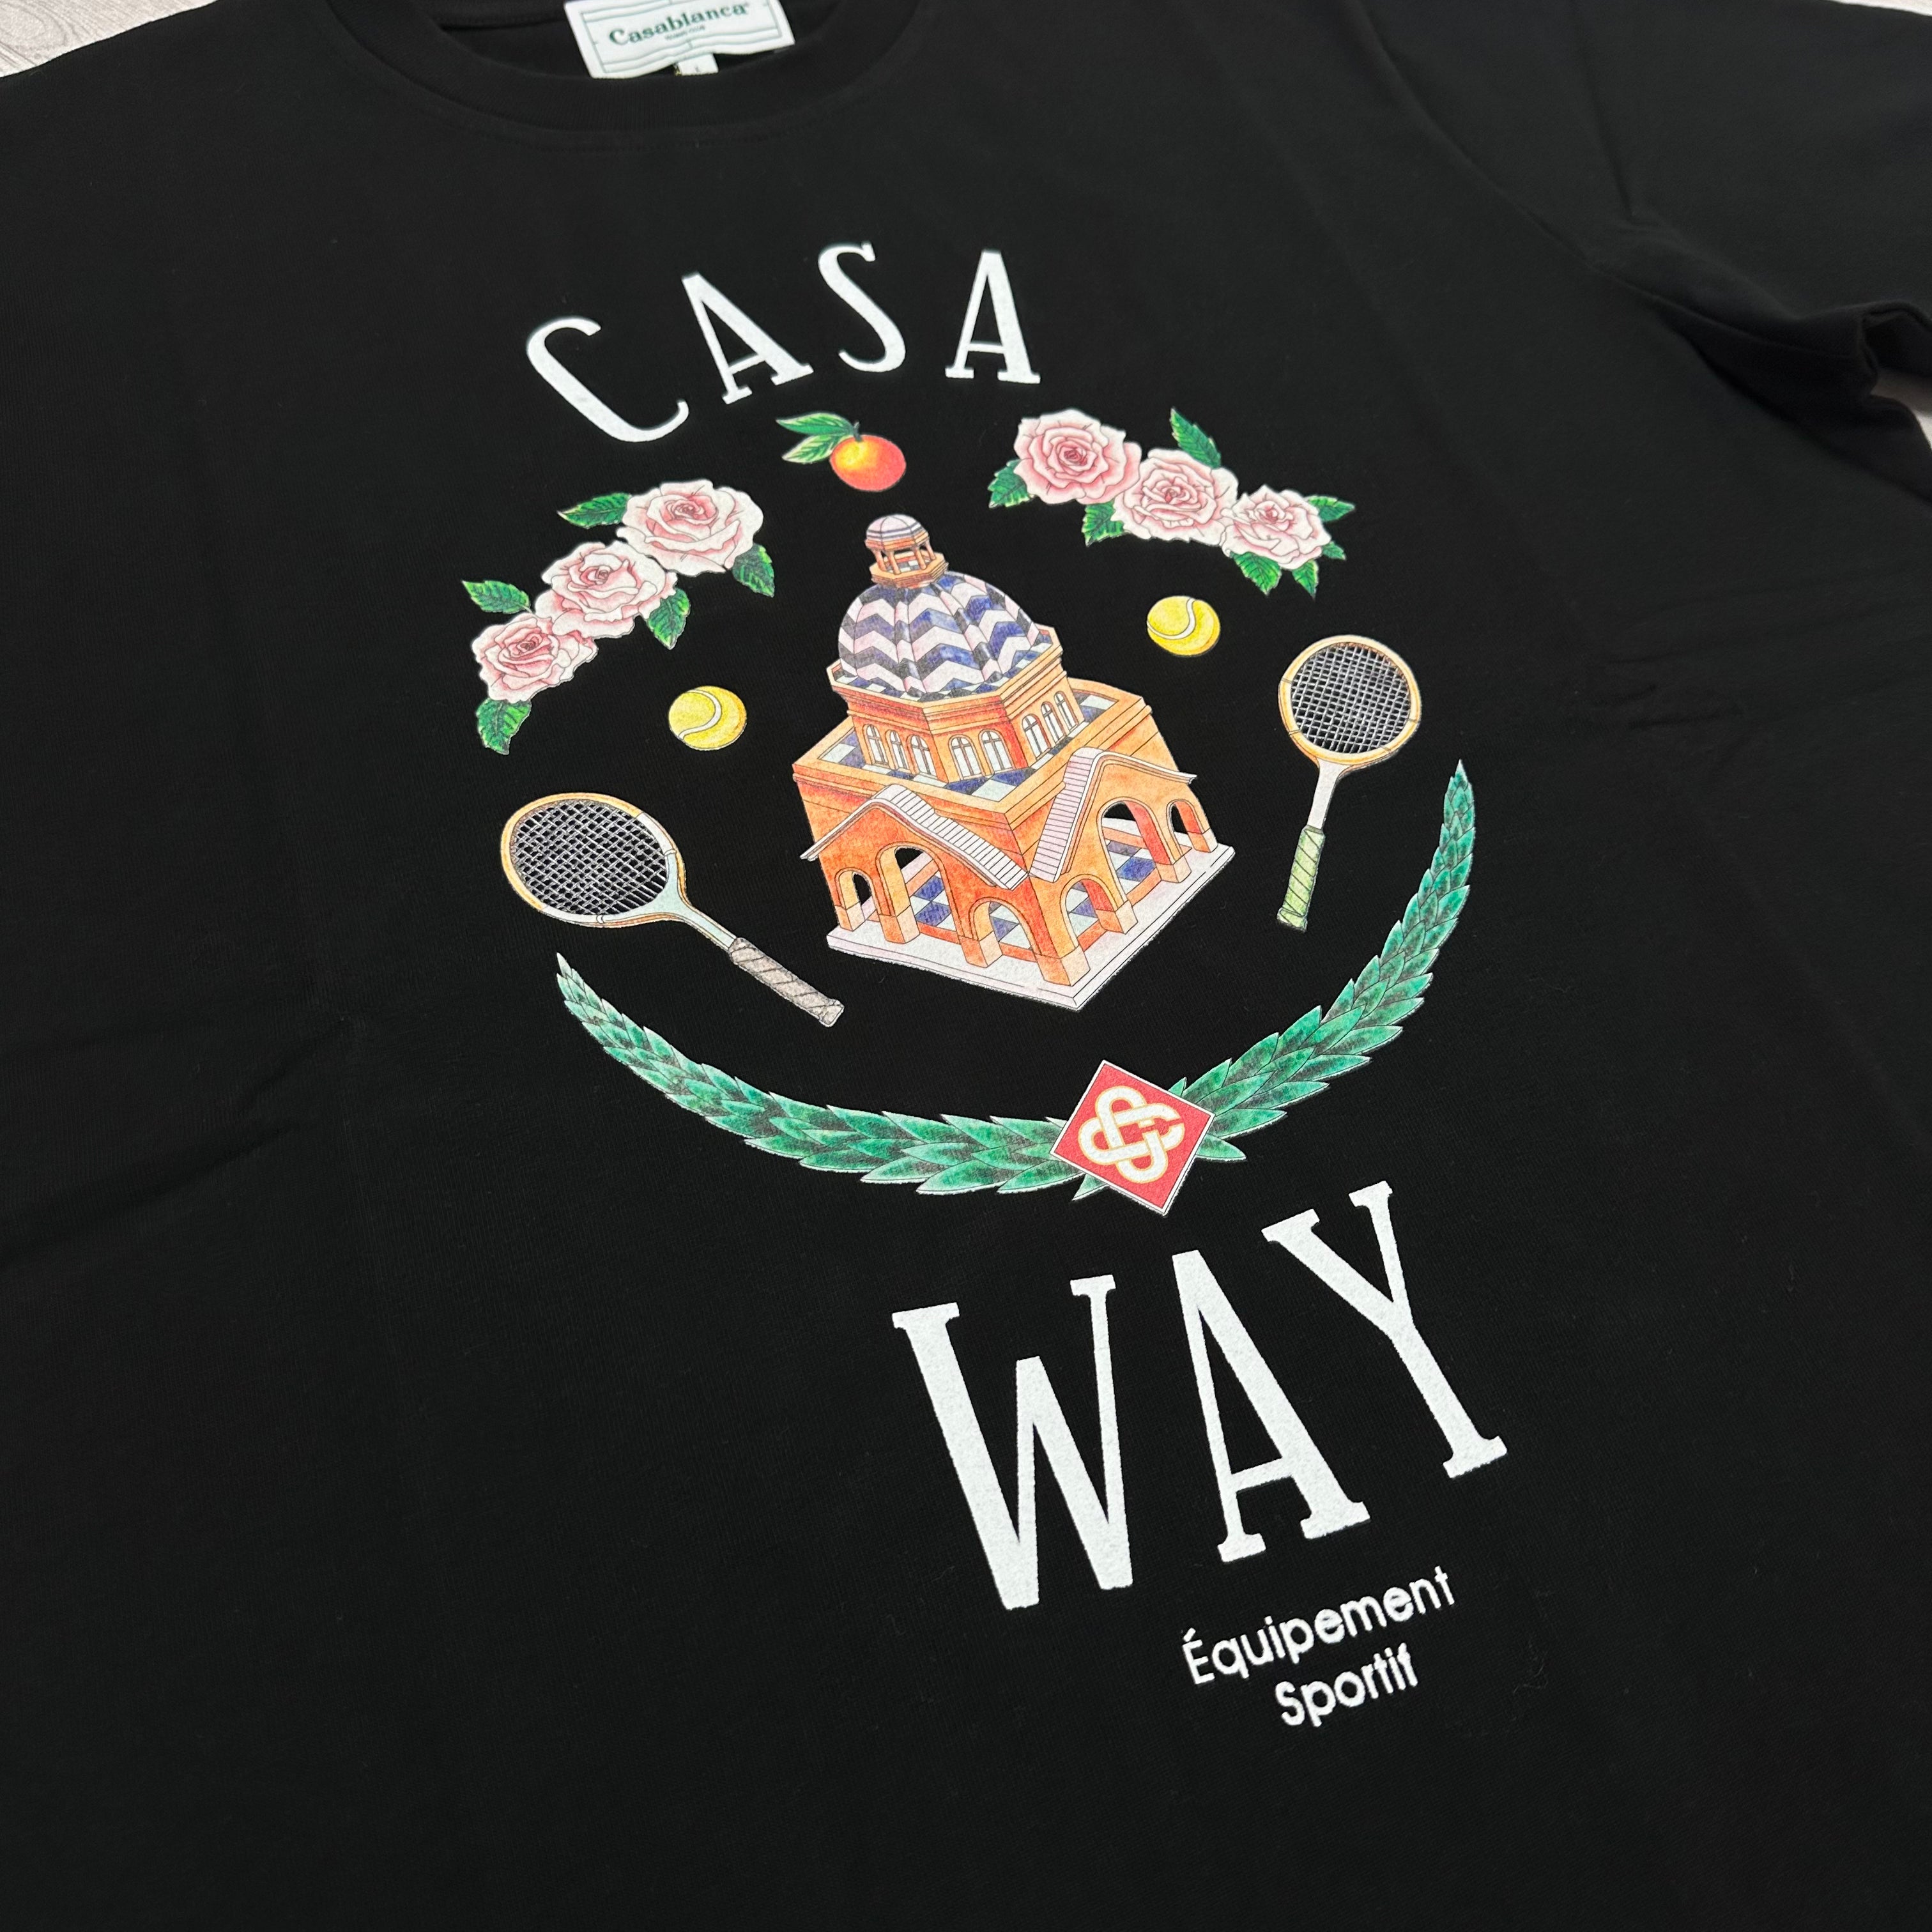 Case Way Tennis Club T-shirt